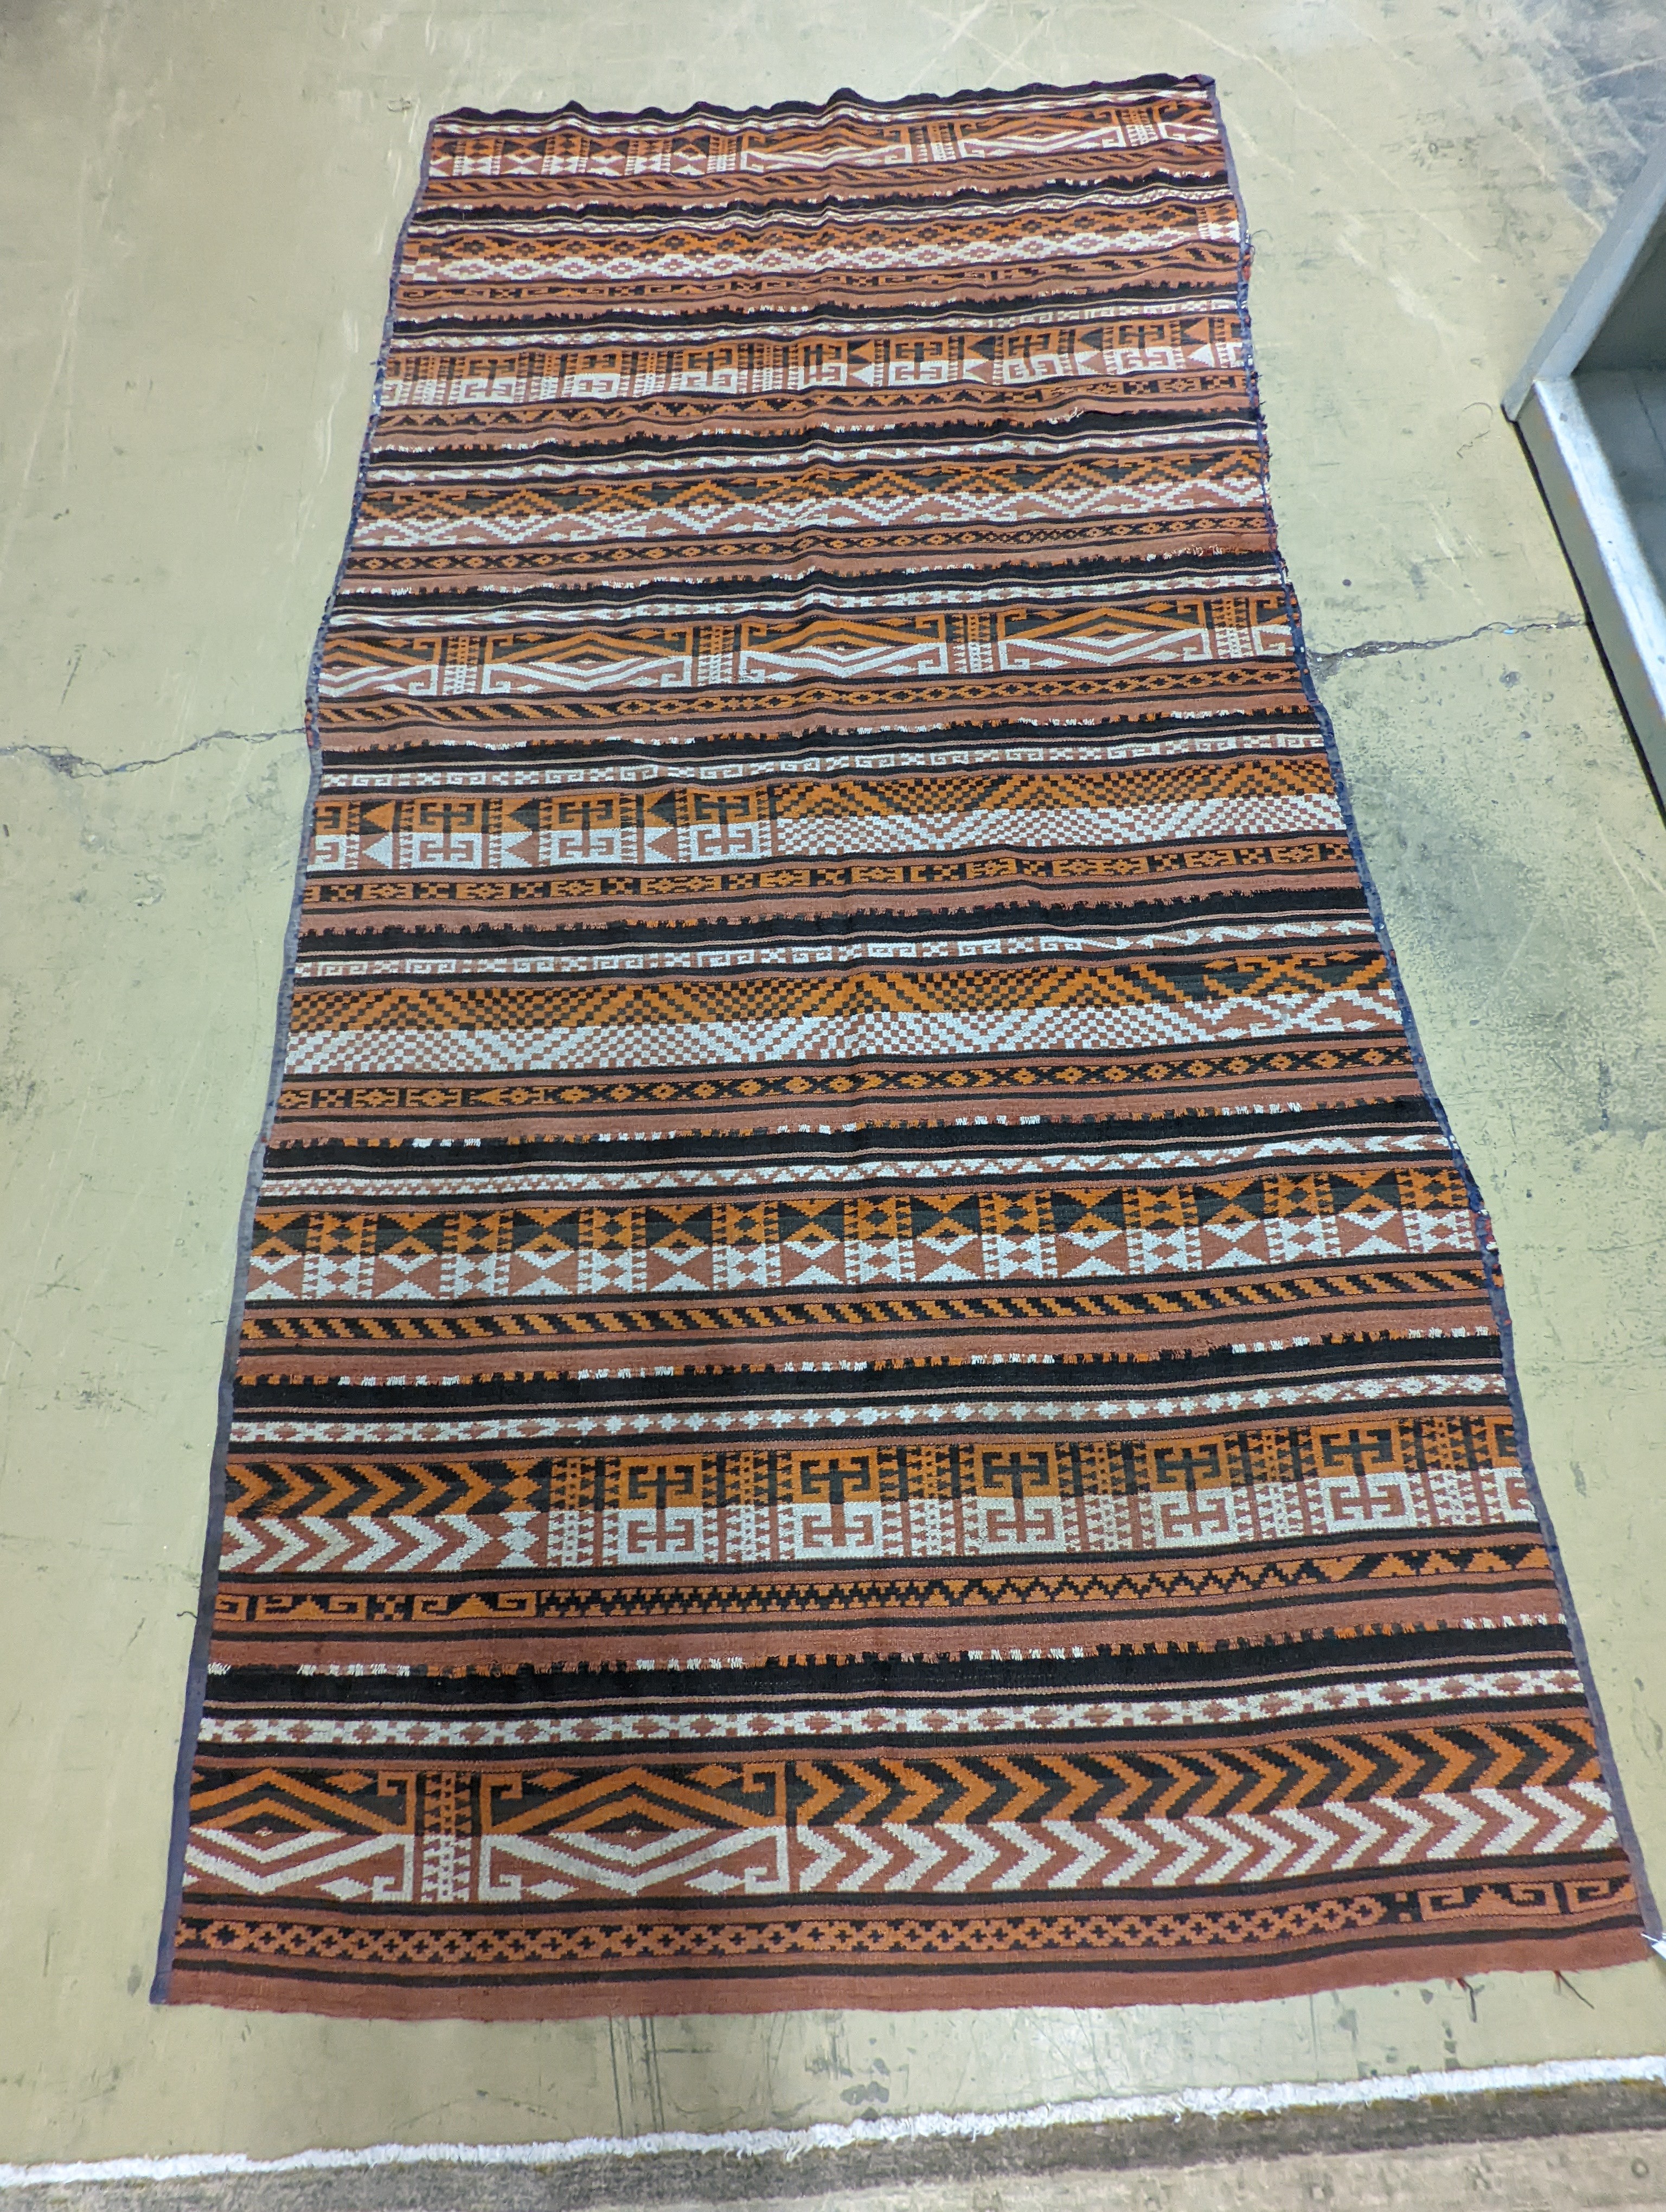 A polychrome flatweave carpet, approx. 330 x 180cm